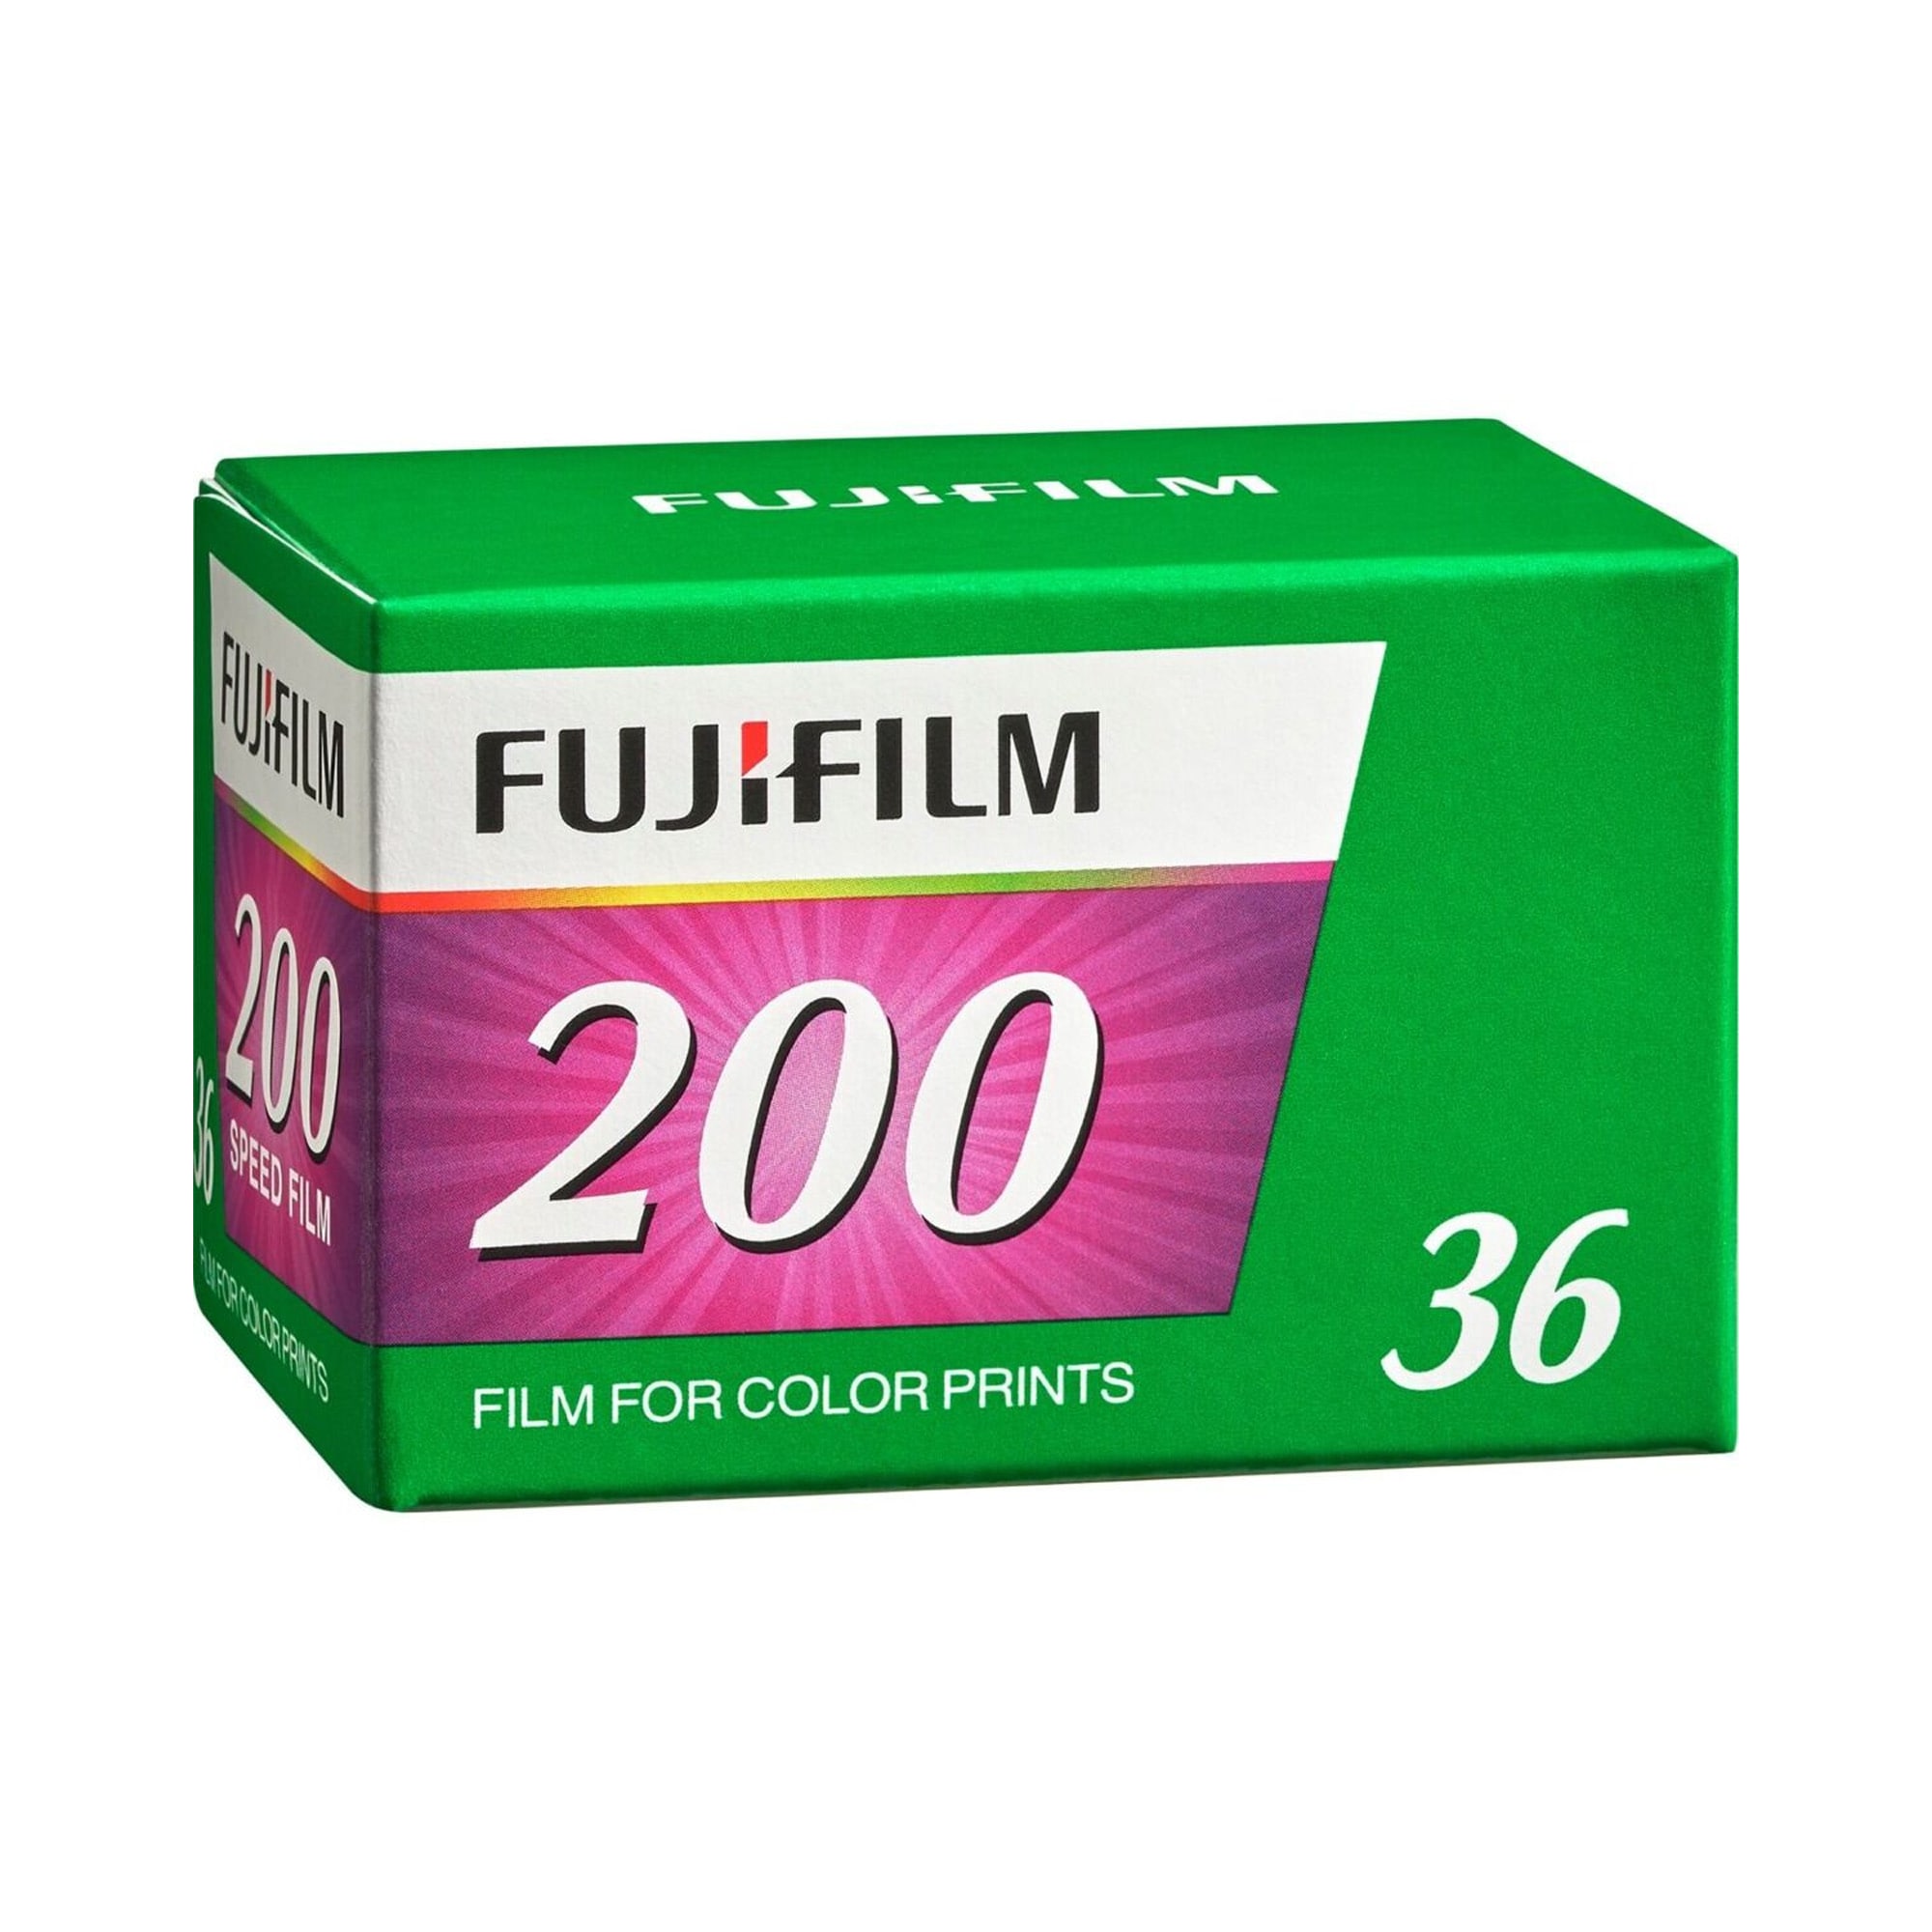 Fujifilm 200 135 36